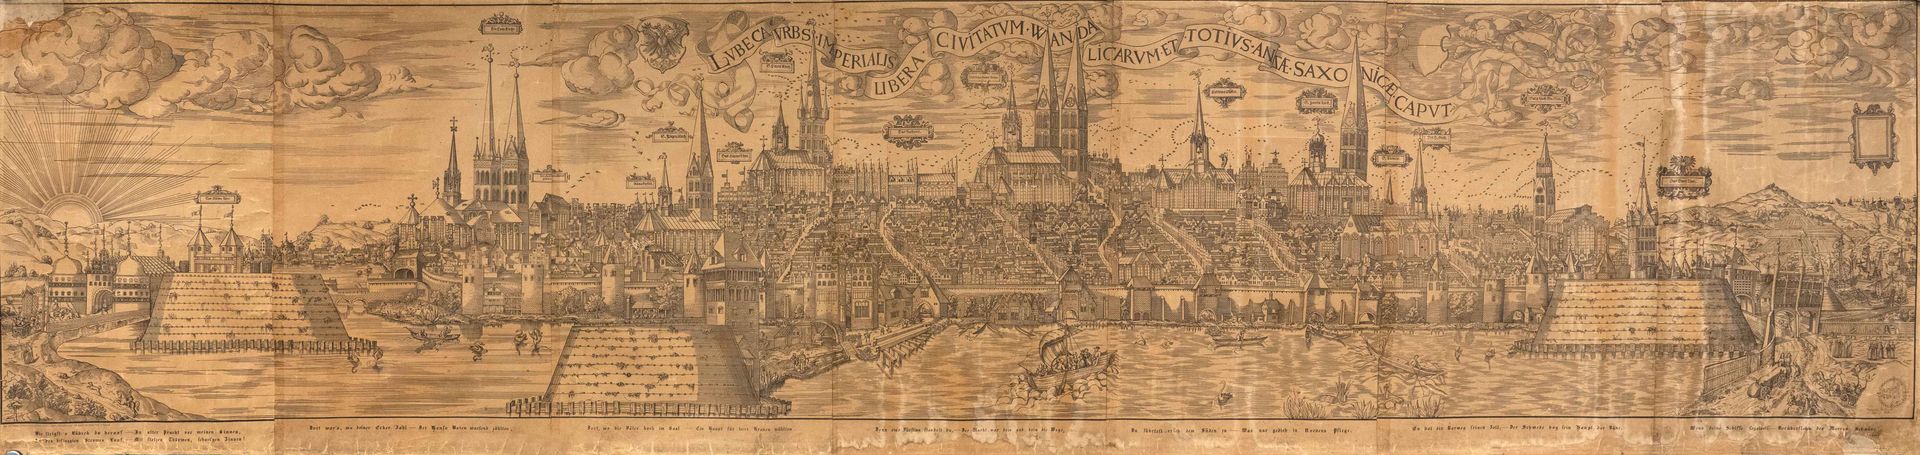 Null 吕贝克的巨大全景图，出自埃利亚斯-迪贝尔之手，"Lubeca urbs imperialis libera civitatum wandalicaru&hellip;